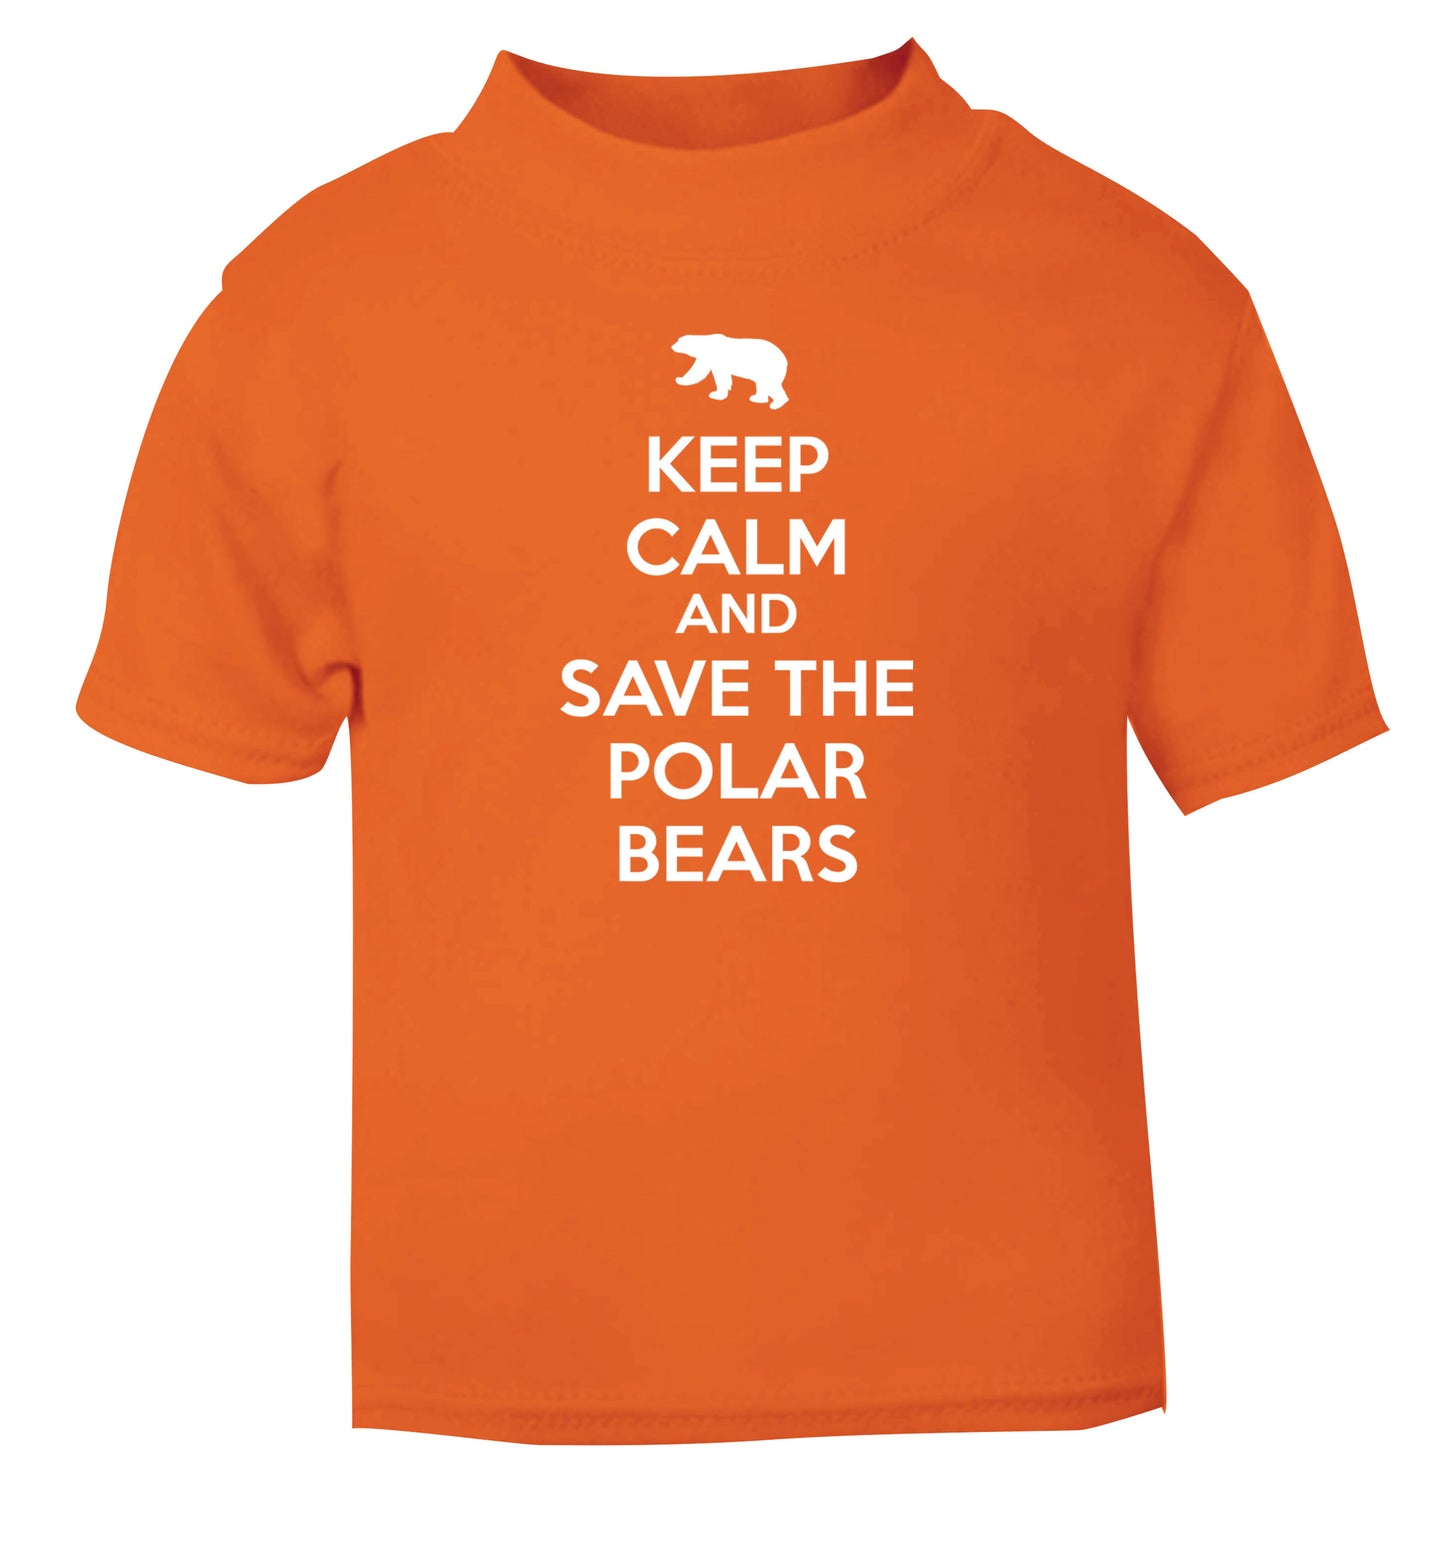 Keep calm and save the polar bears orange Baby Toddler Tshirt 2 Years